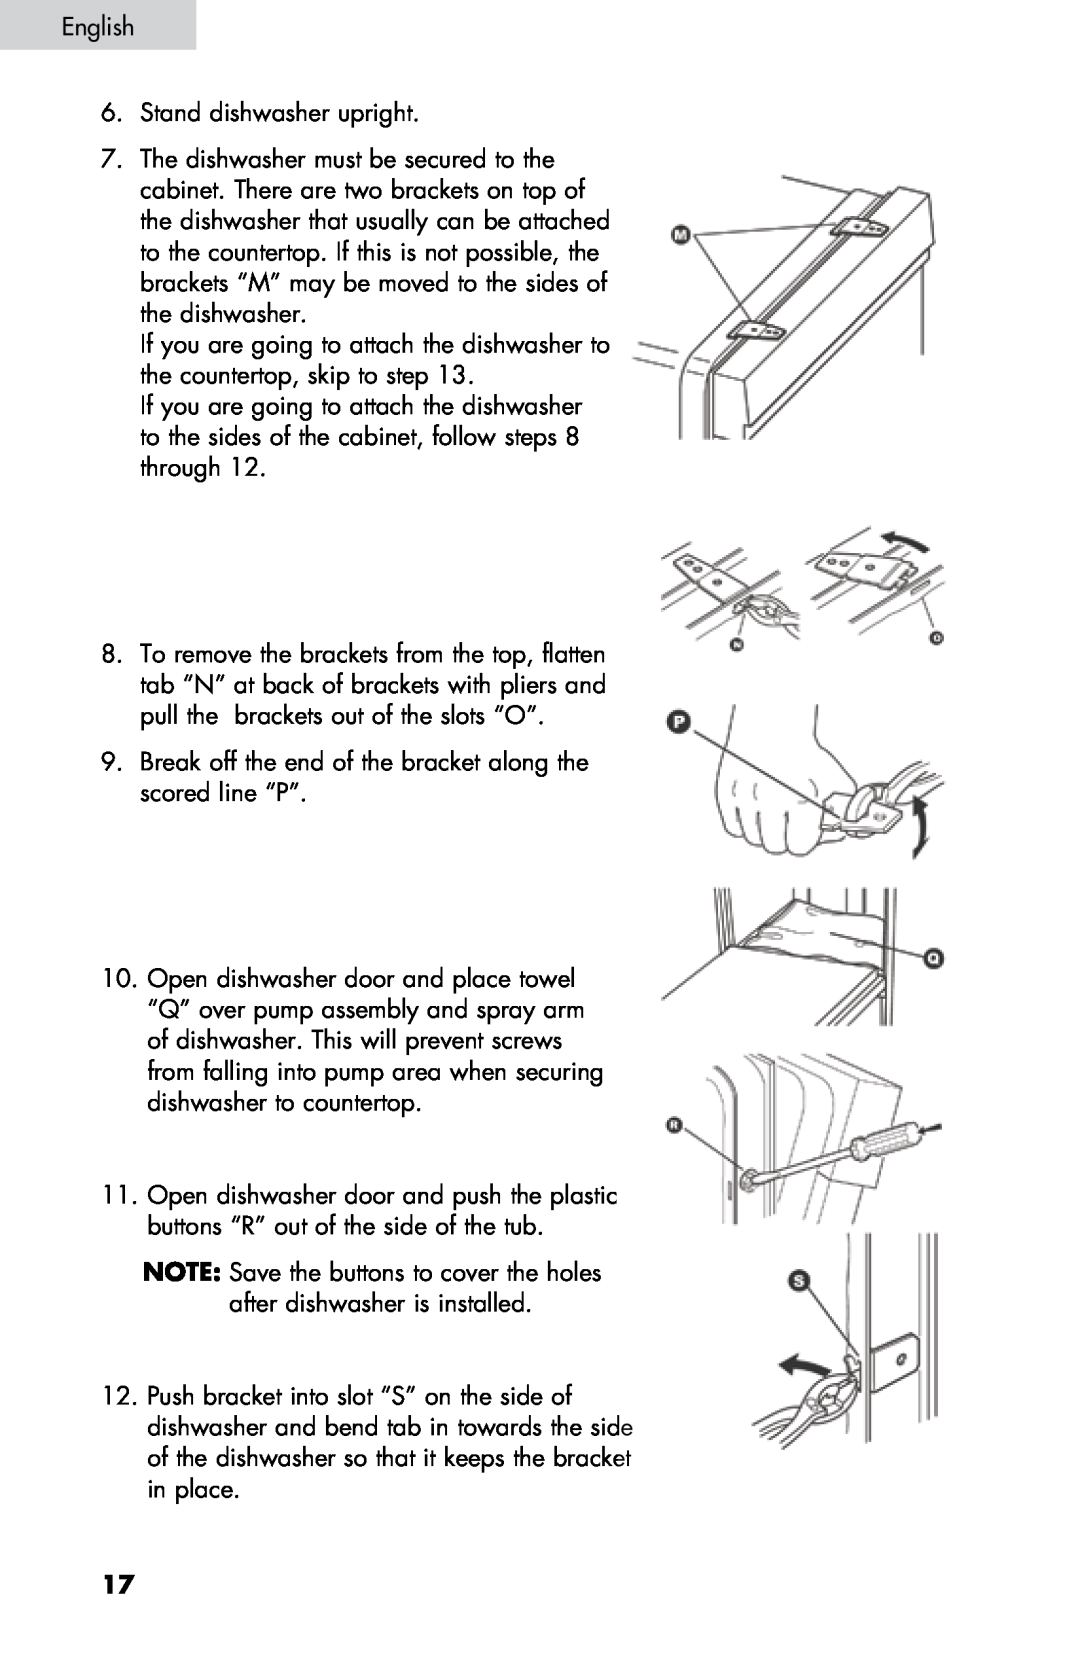 Haier DW-7777-01 manual English 6. Stand dishwasher upright 